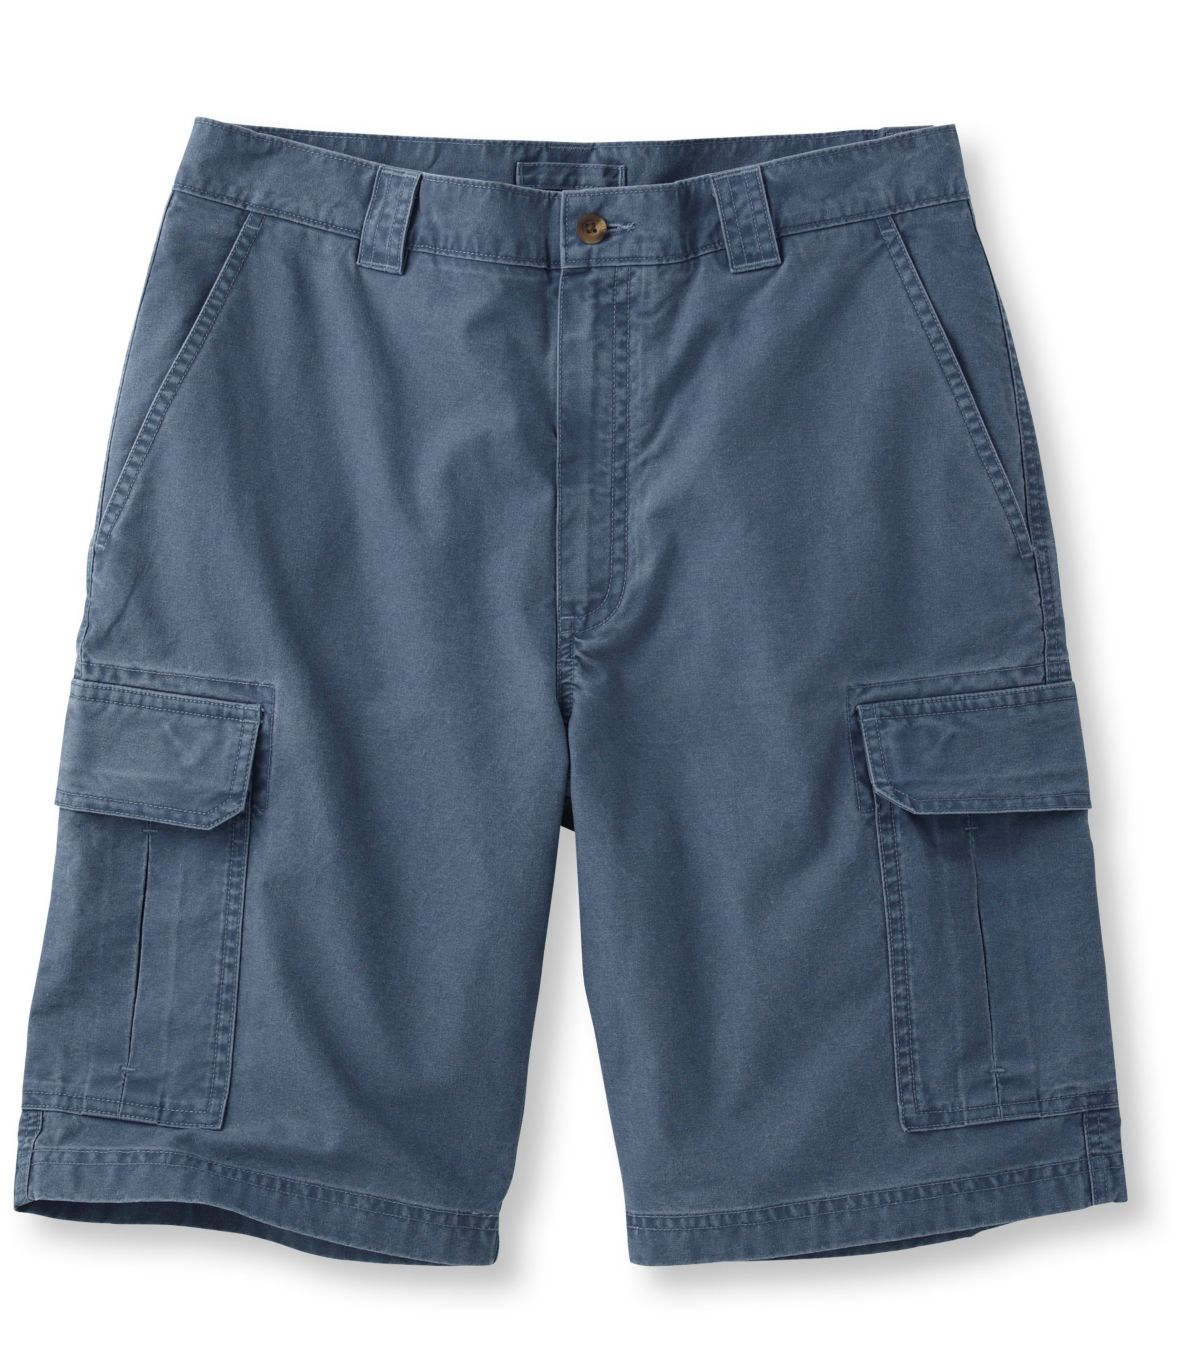 Men's Tropic-Weight Cargo Shorts, 10"